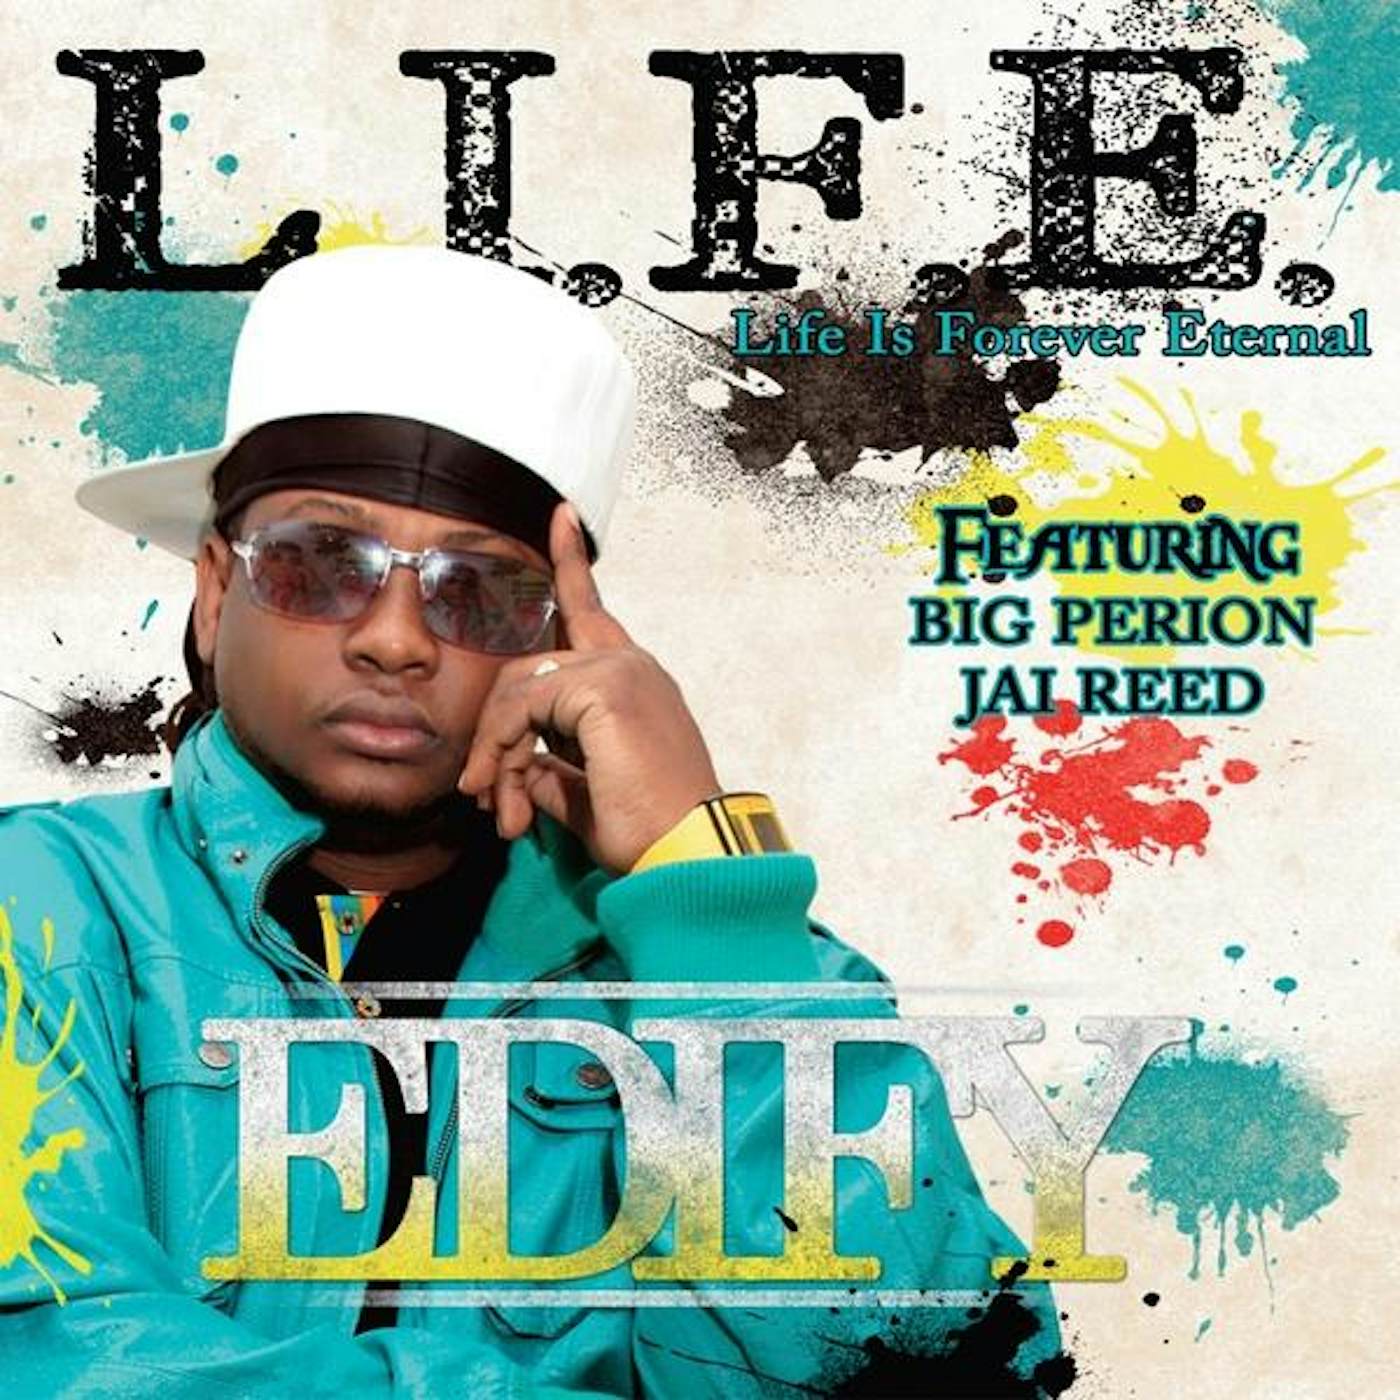 Edify LIFE CD